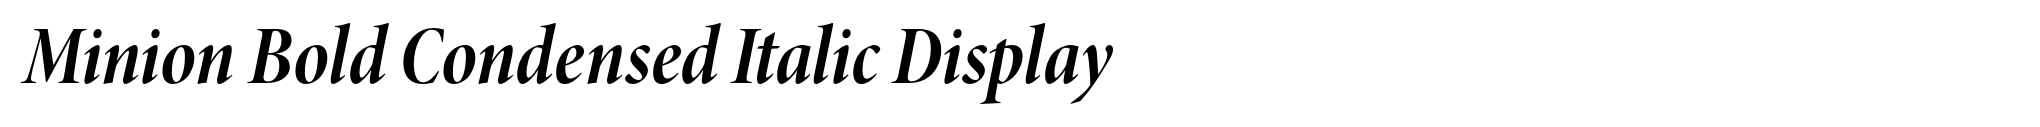 Minion Bold Condensed Italic Display image